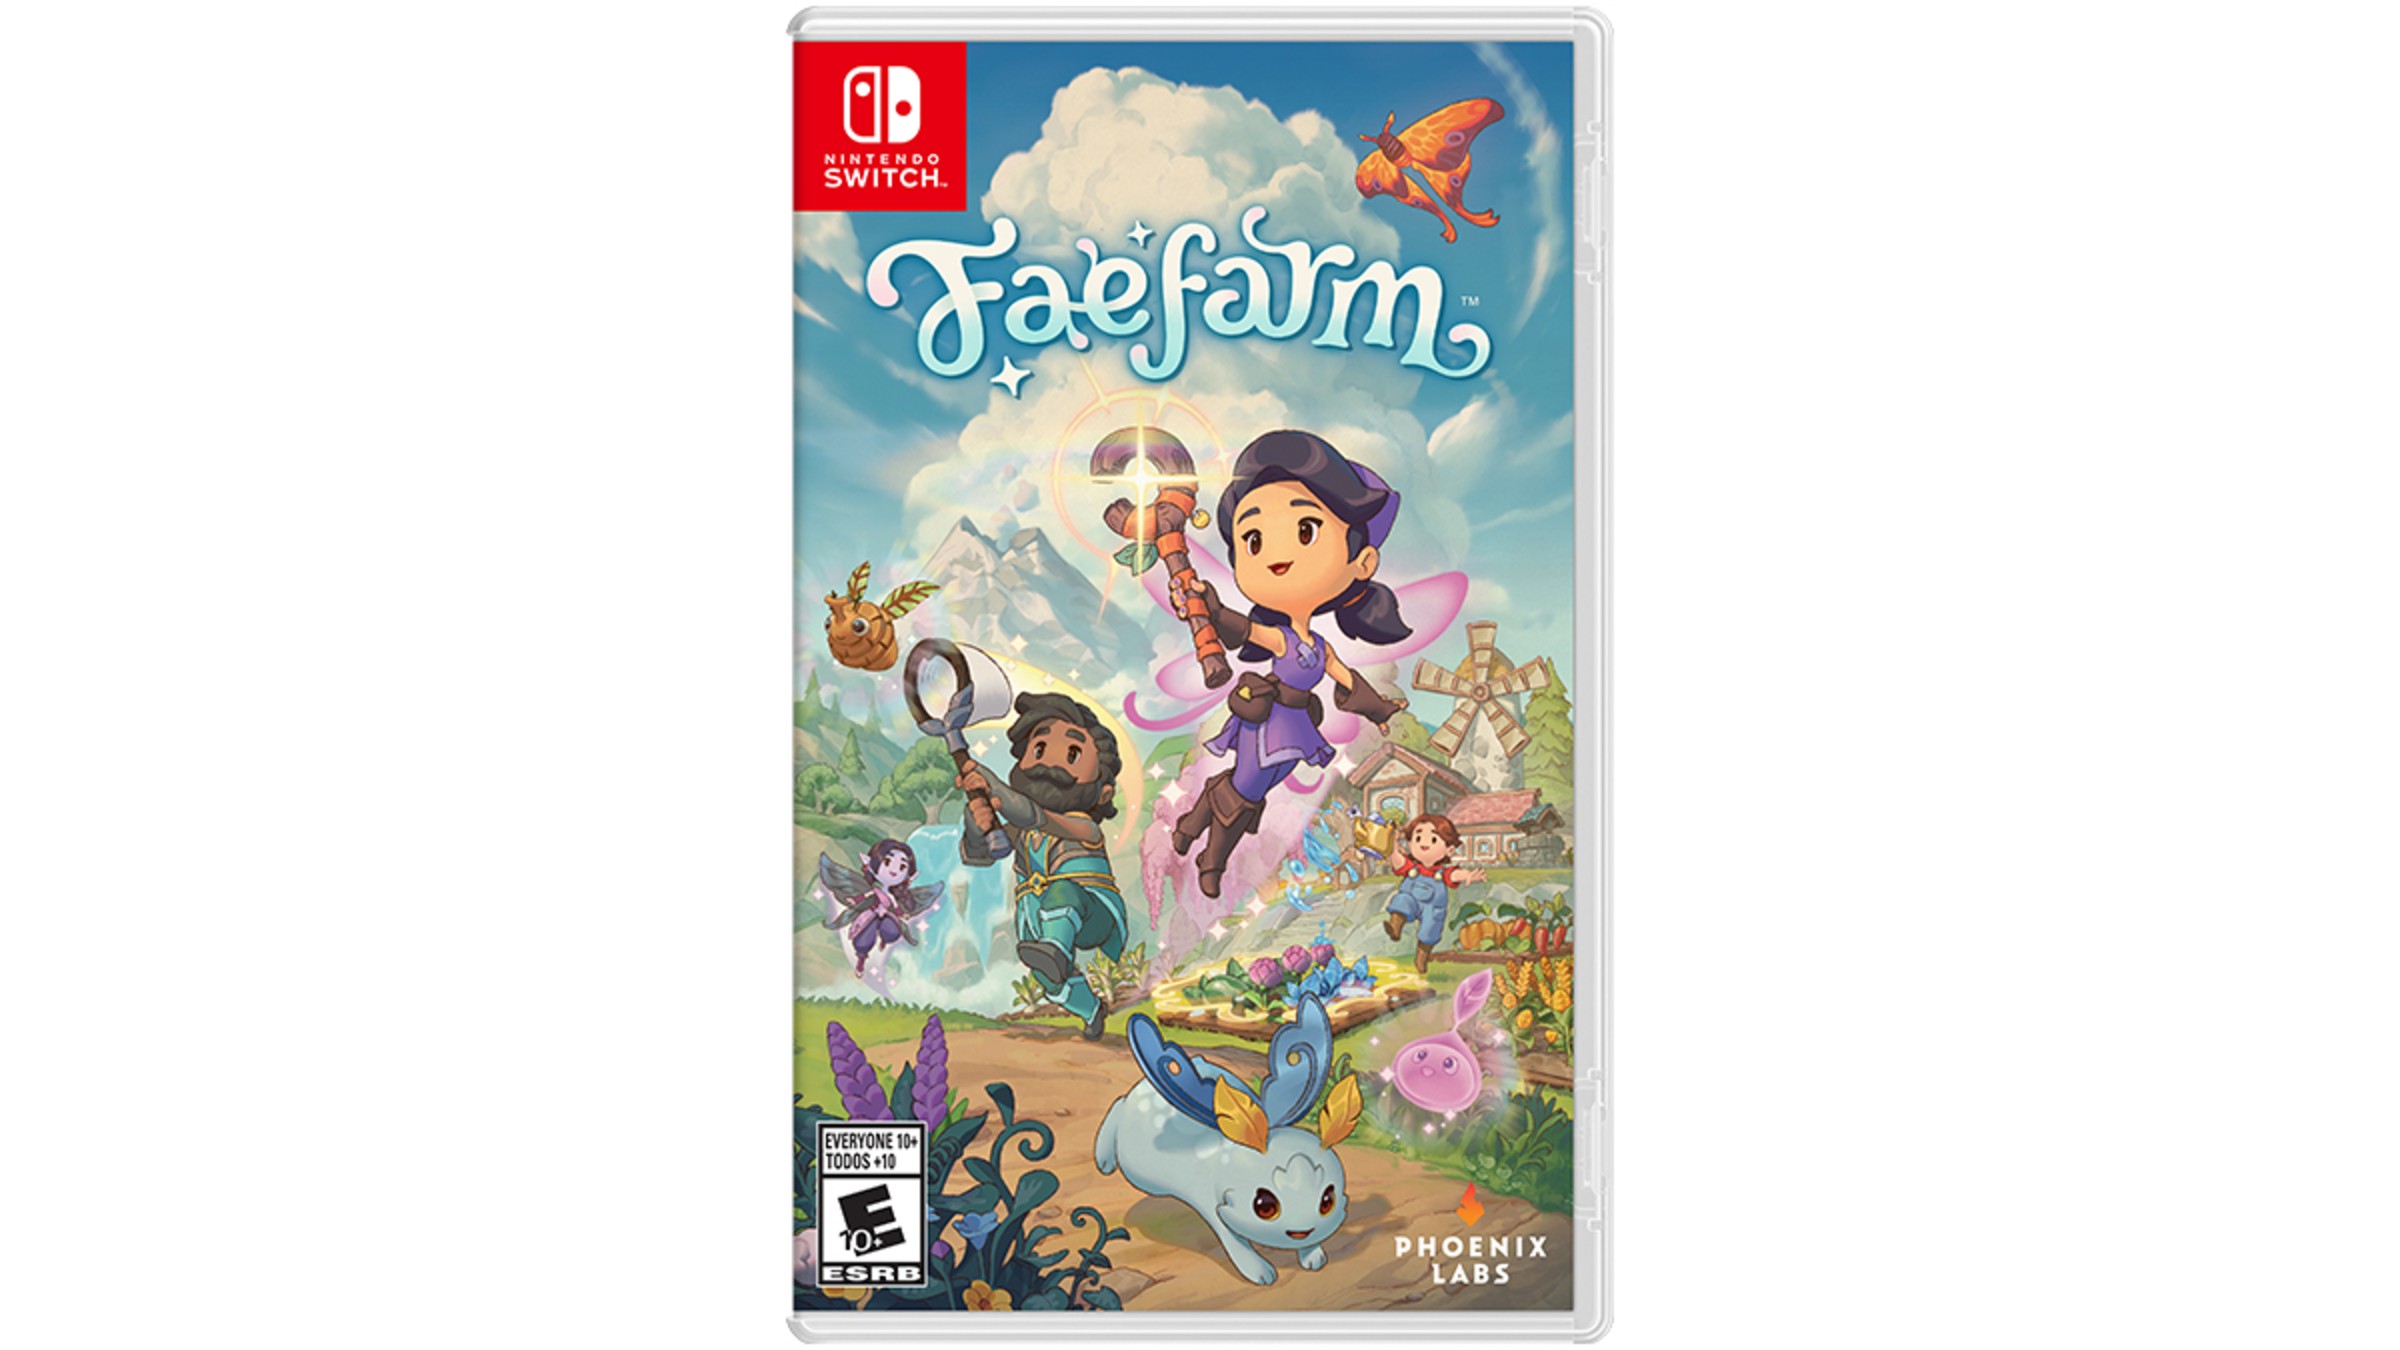 Fae Farm - Un jeu sur Nintendo Switch tout mignon et relaxant - GEEKNPLAY  Home, News, Nintendo Switch